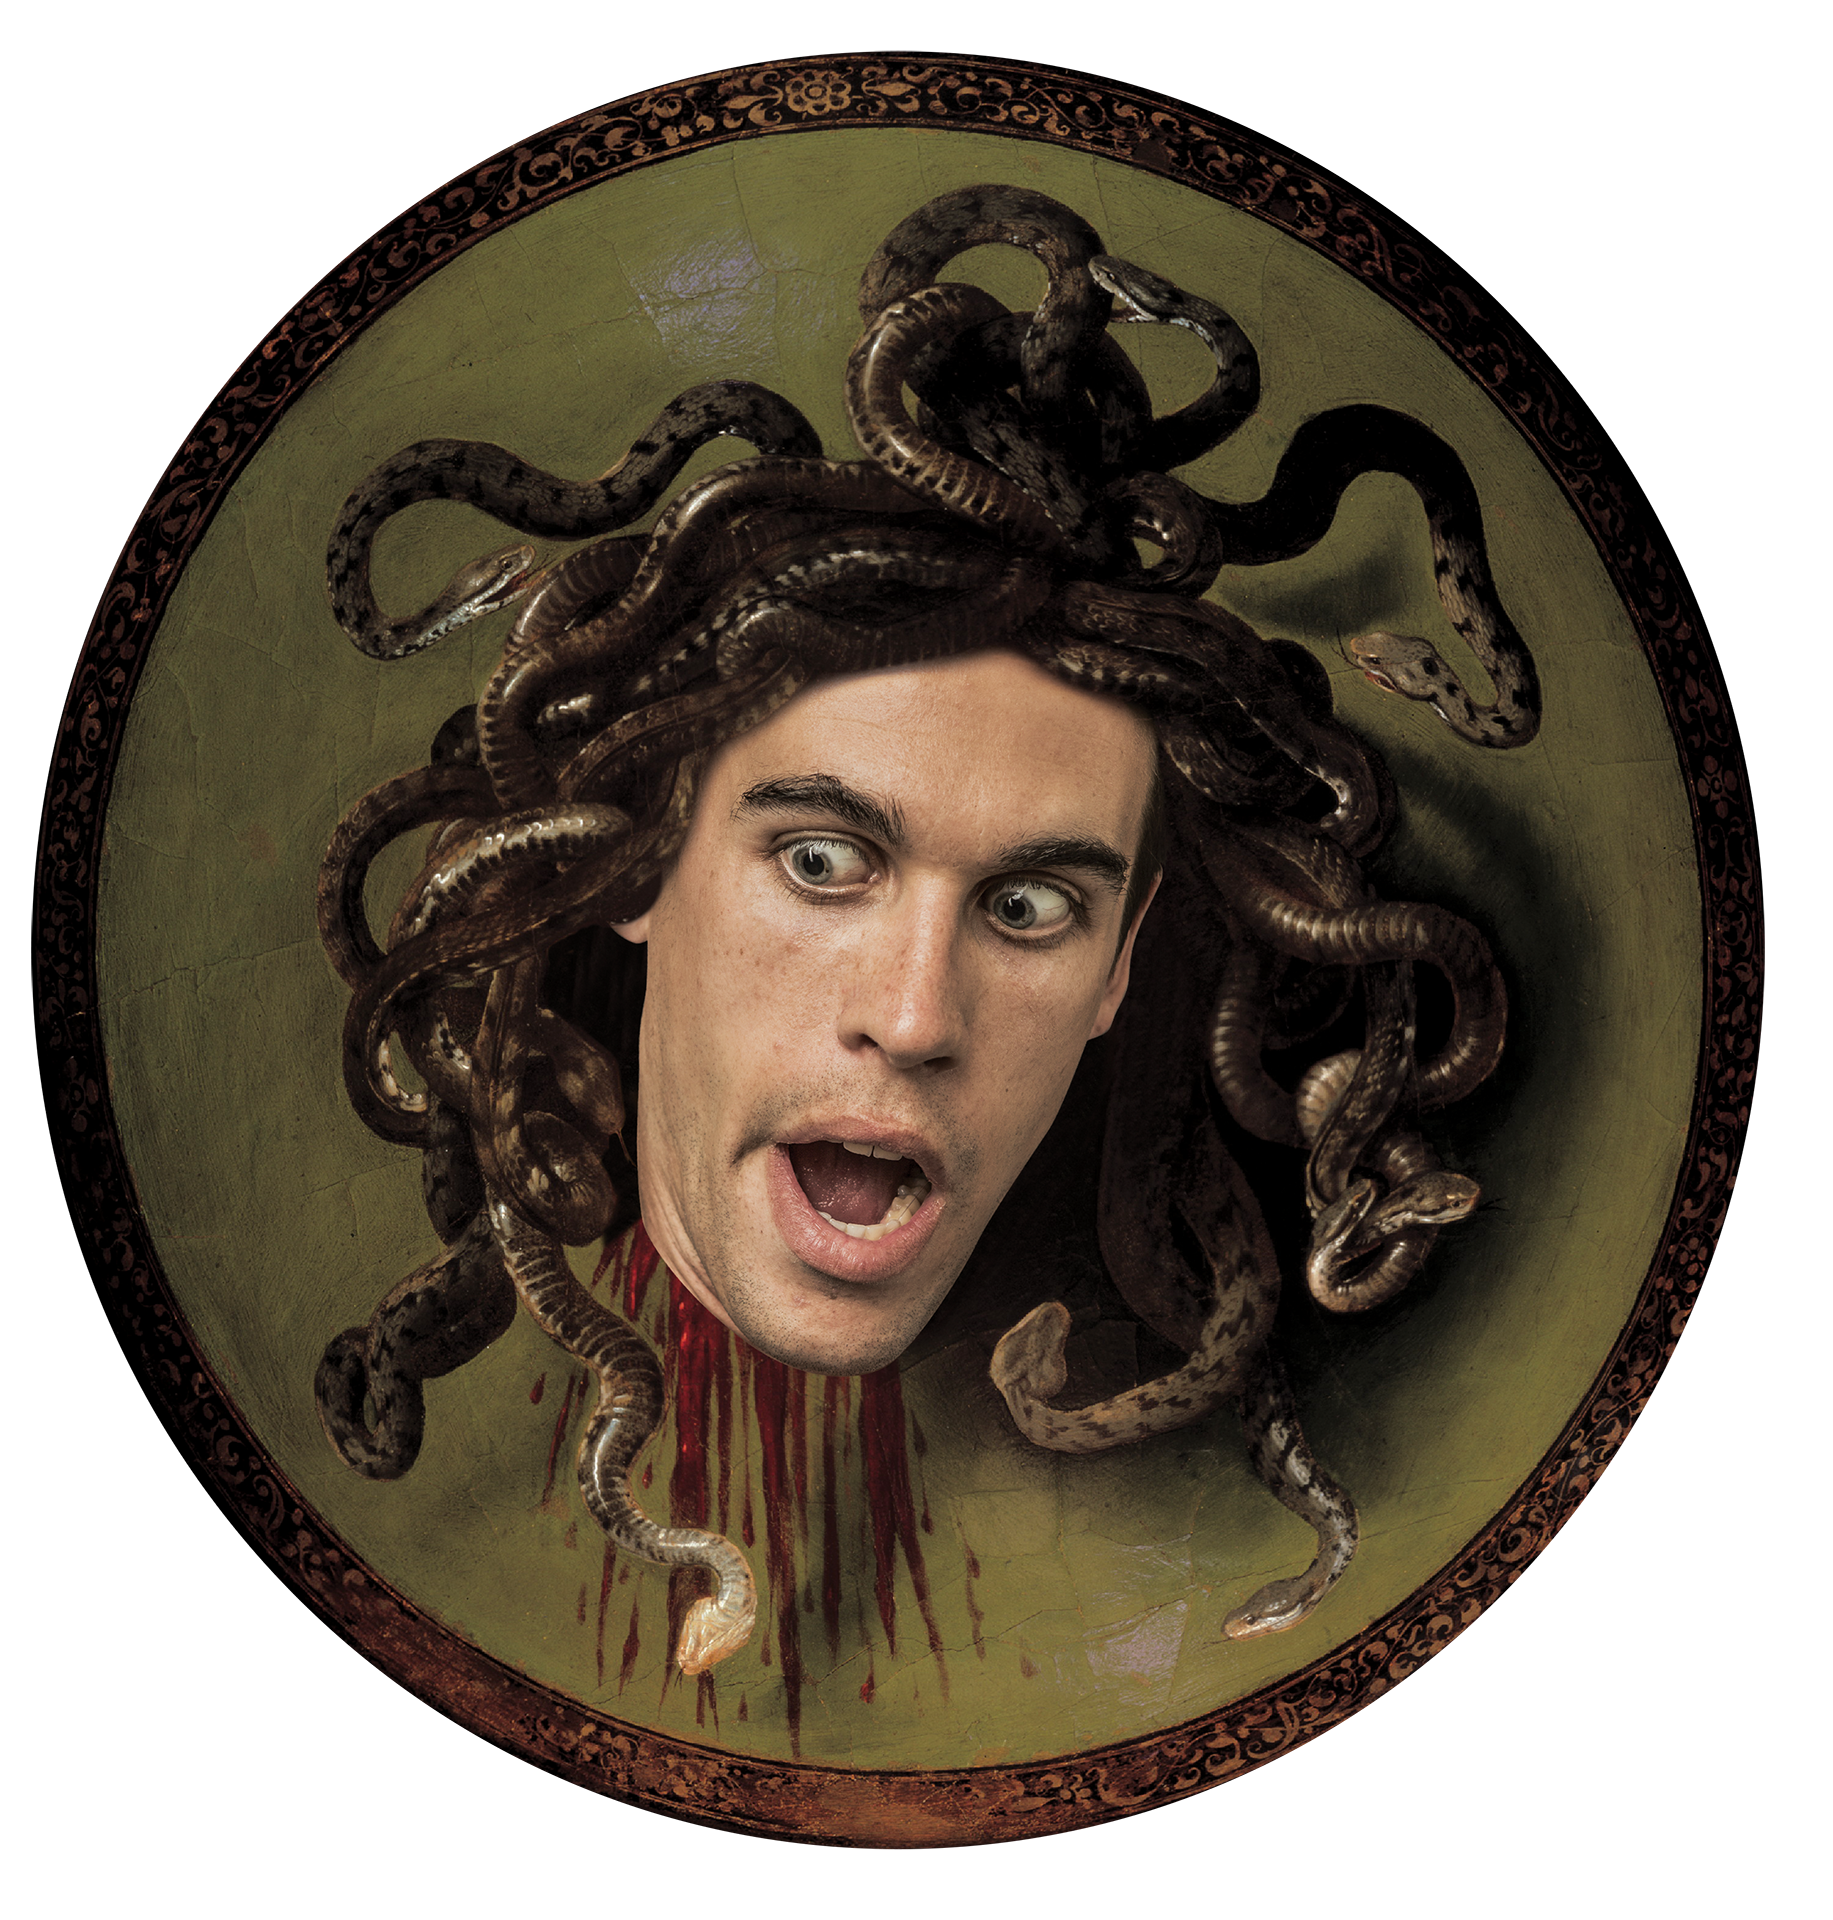 © David Johnson / Original painting: "Medusa" by Caravaggio.